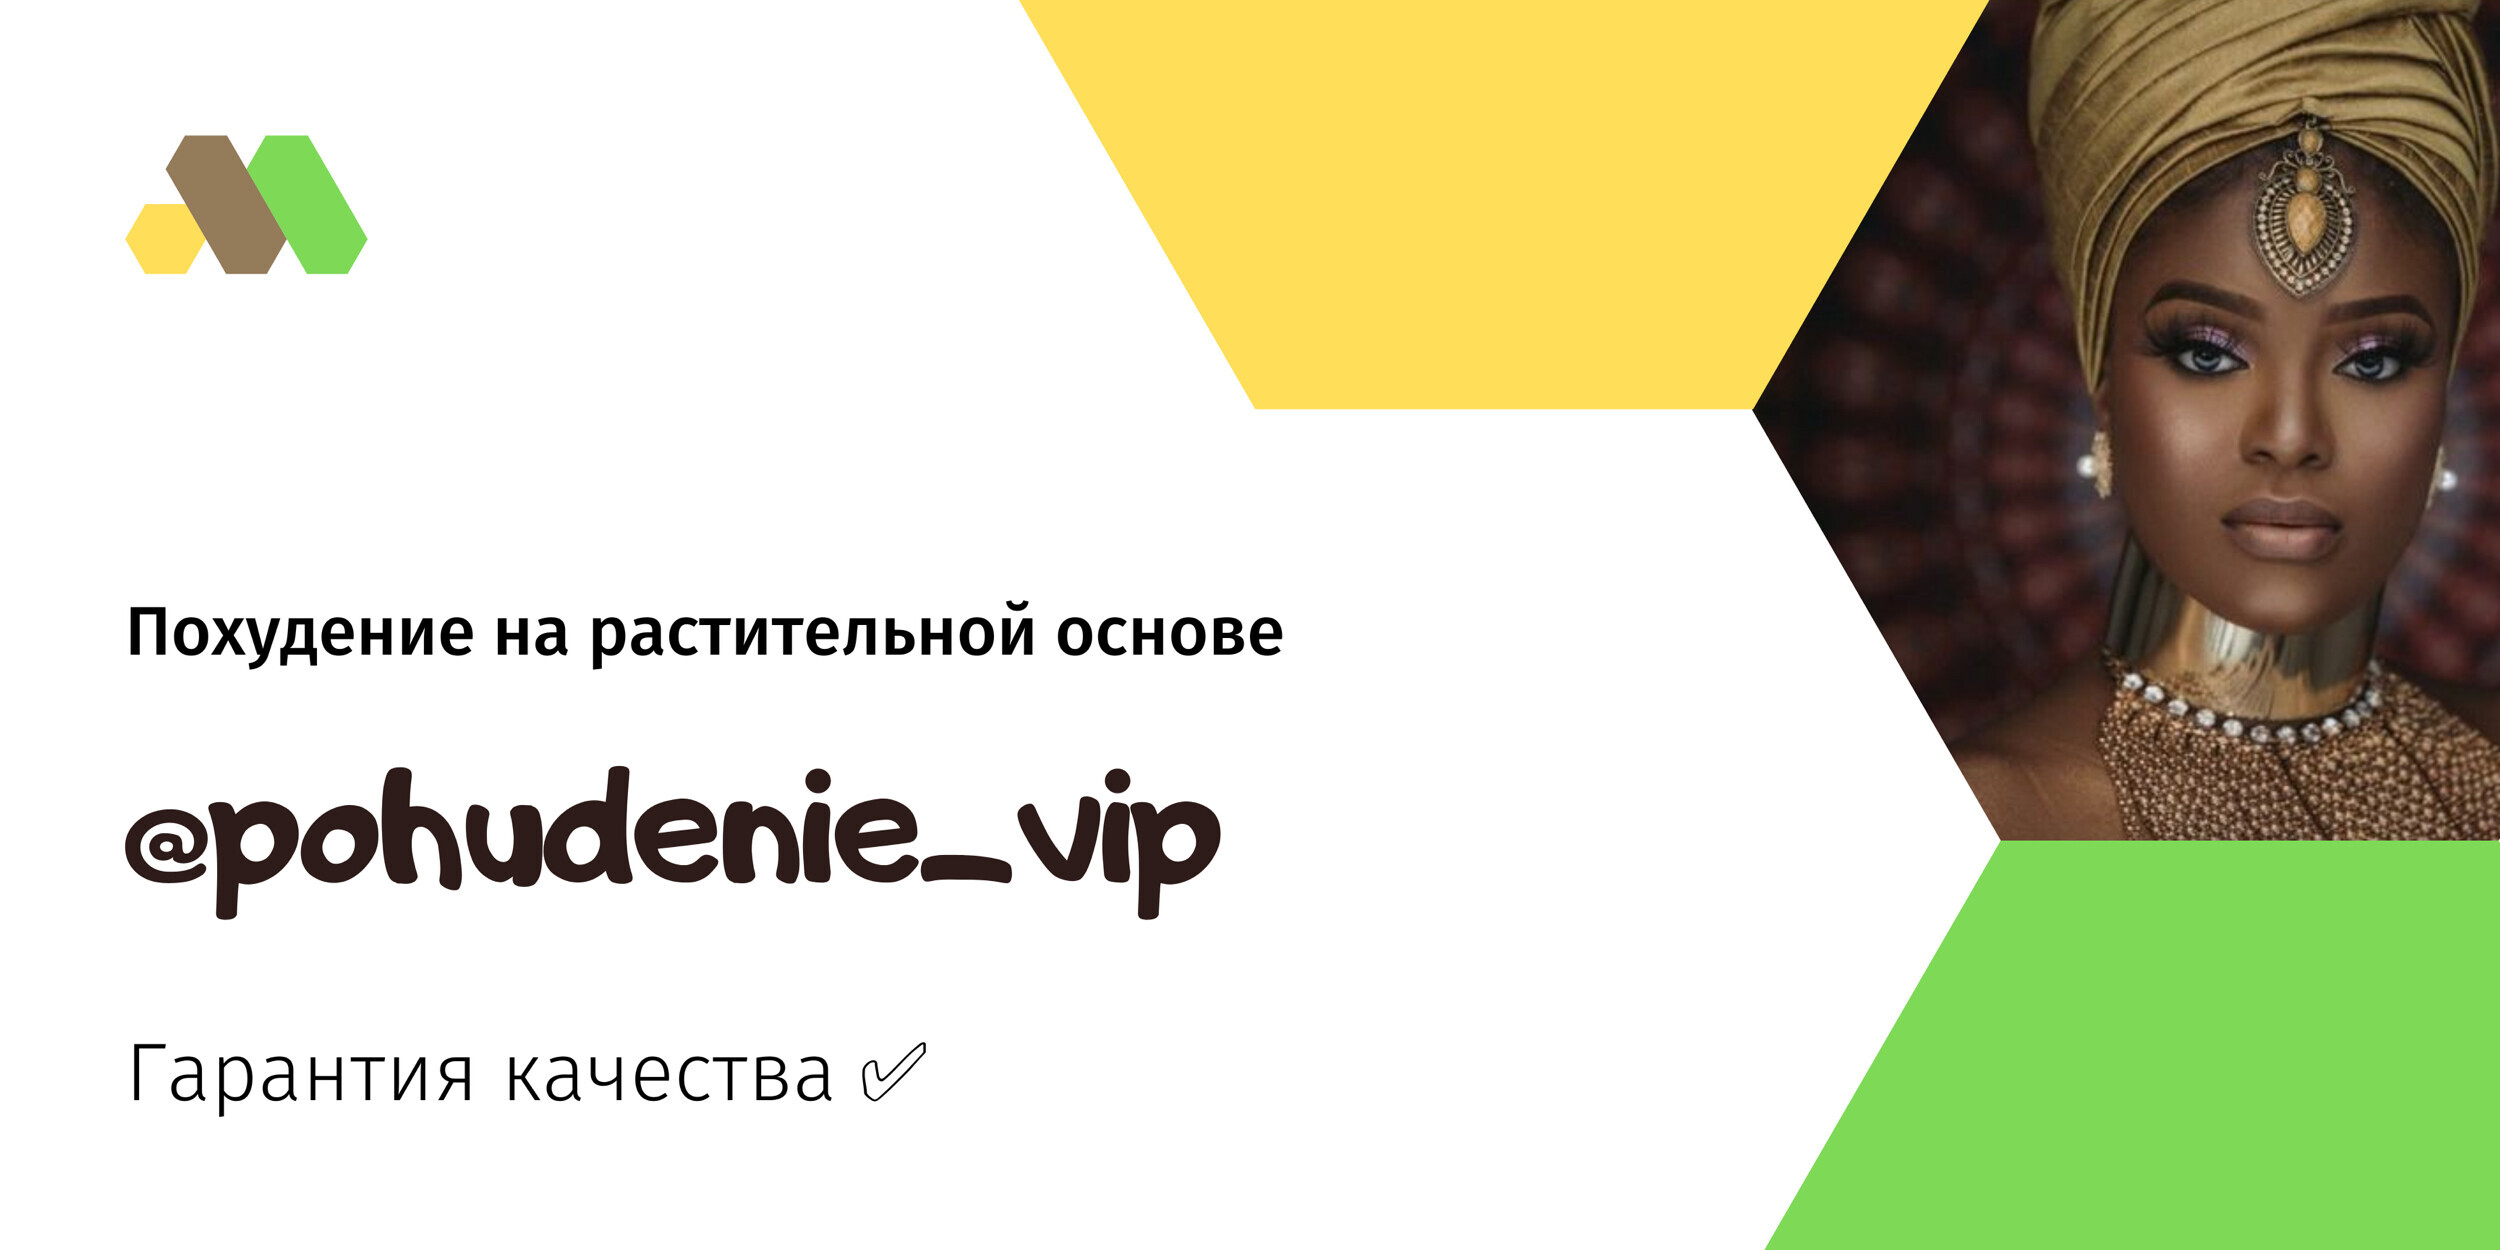 pohudenie_vip ➤ Кыргызстан ᐉ Бизнес-профиль компании на lalafo.kg